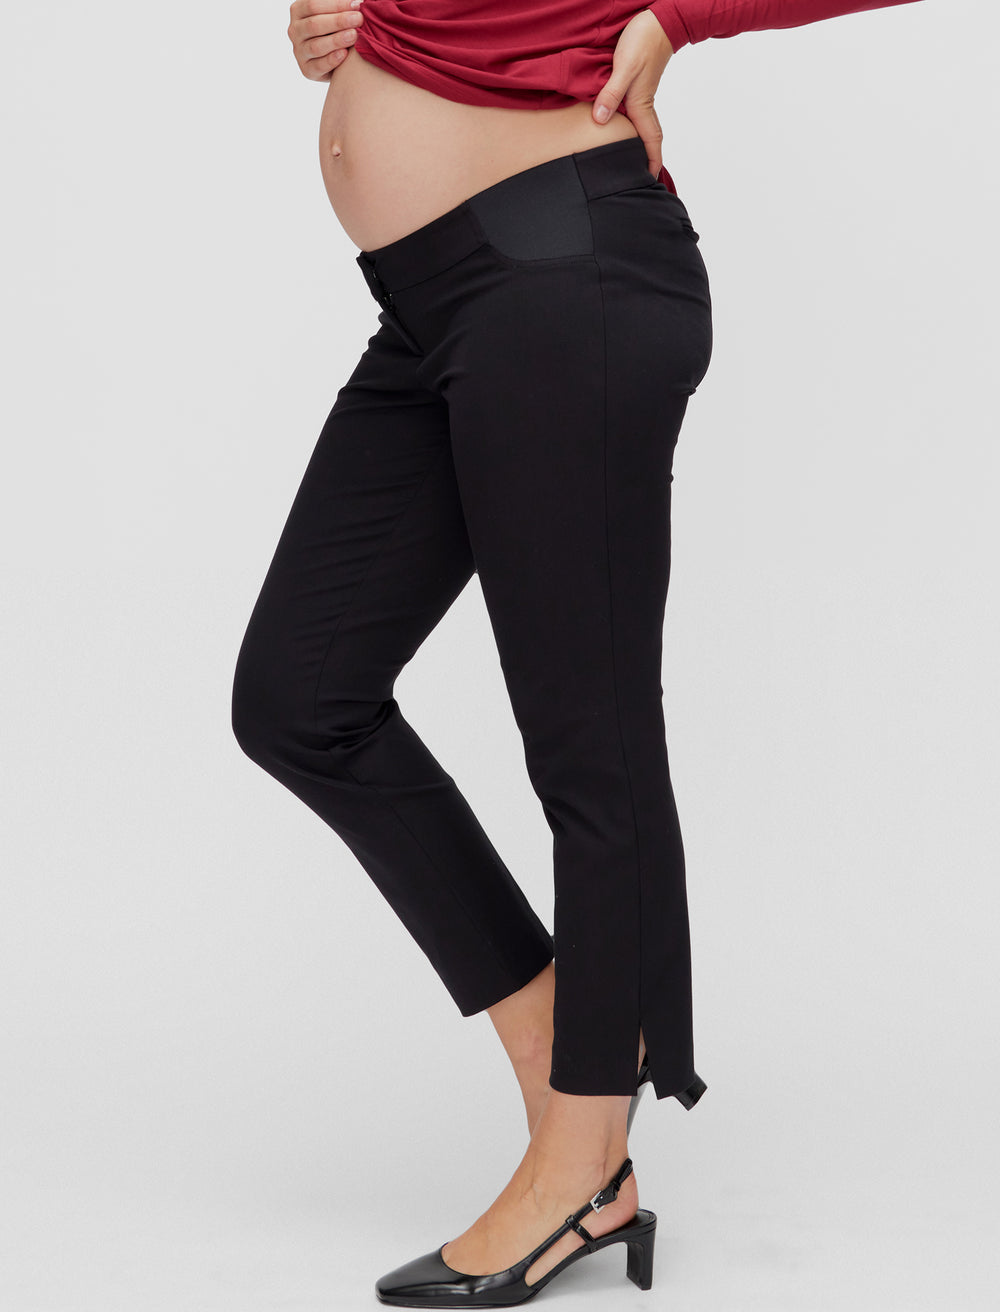 Maternity Leggings & Pants | Nordstrom